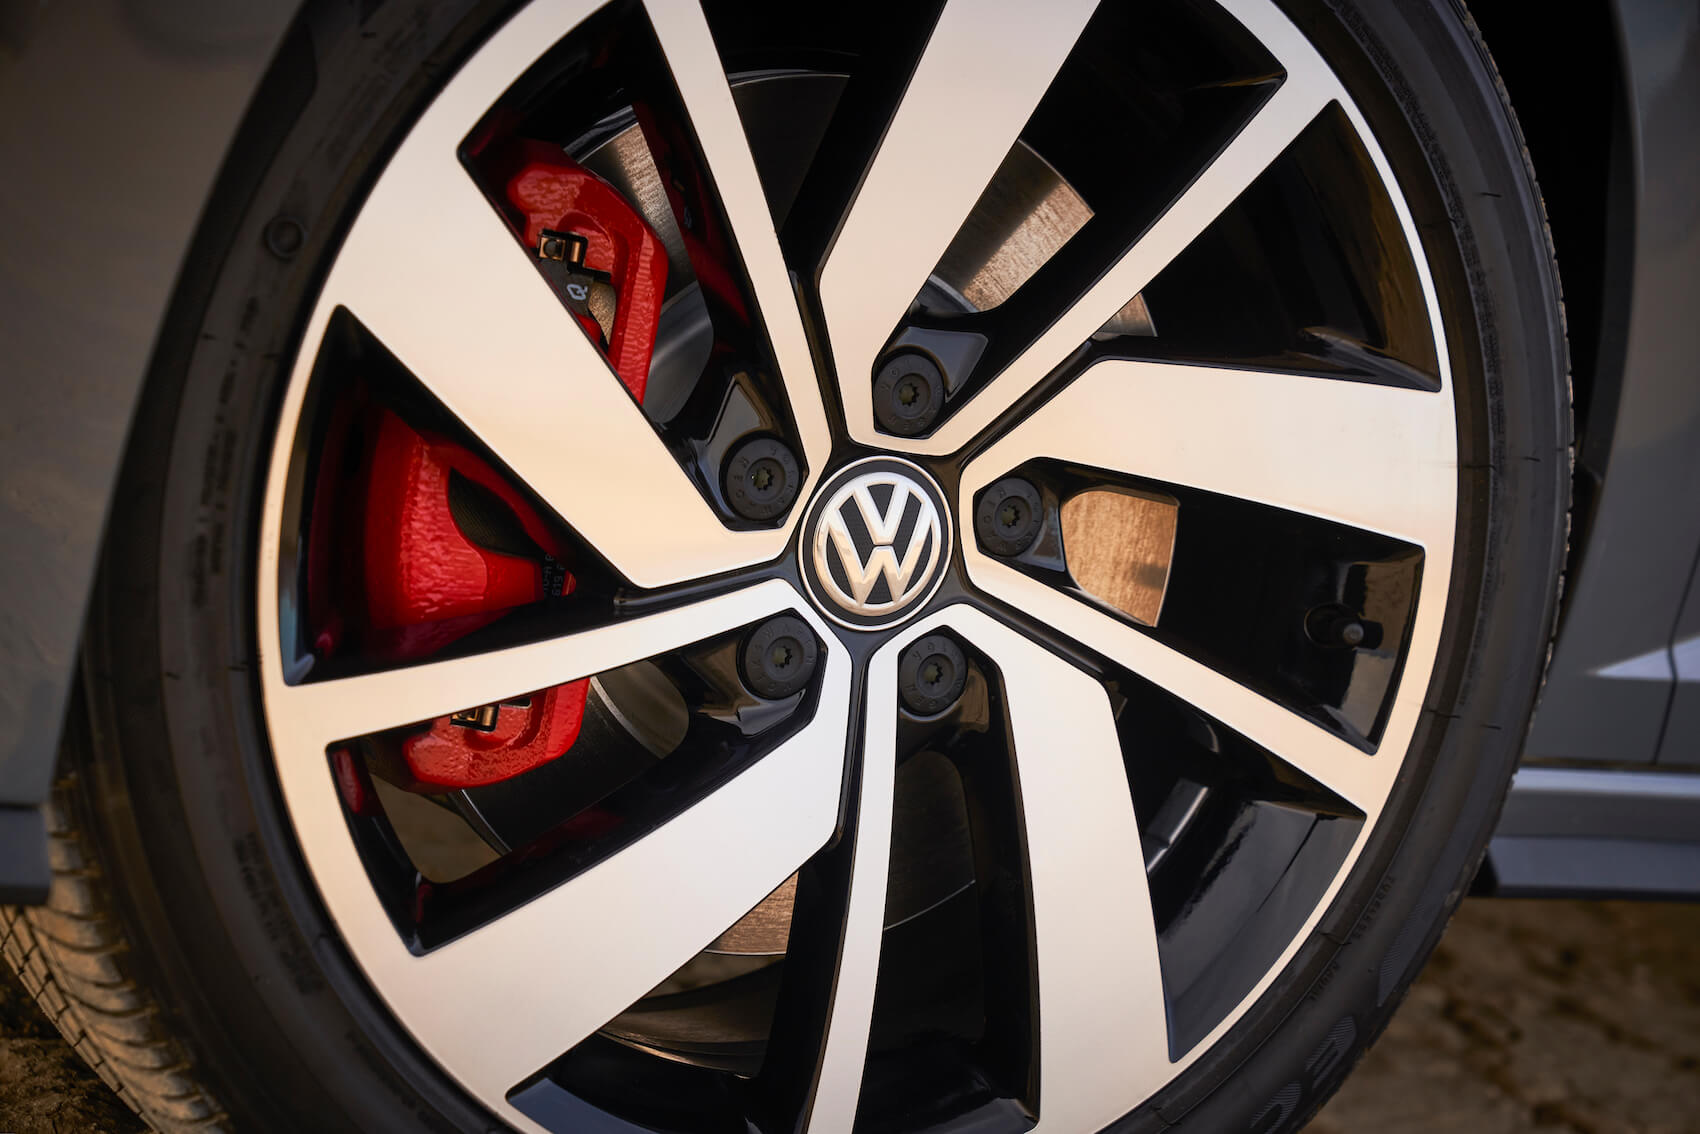 2020 Volkswagen Jetta tire